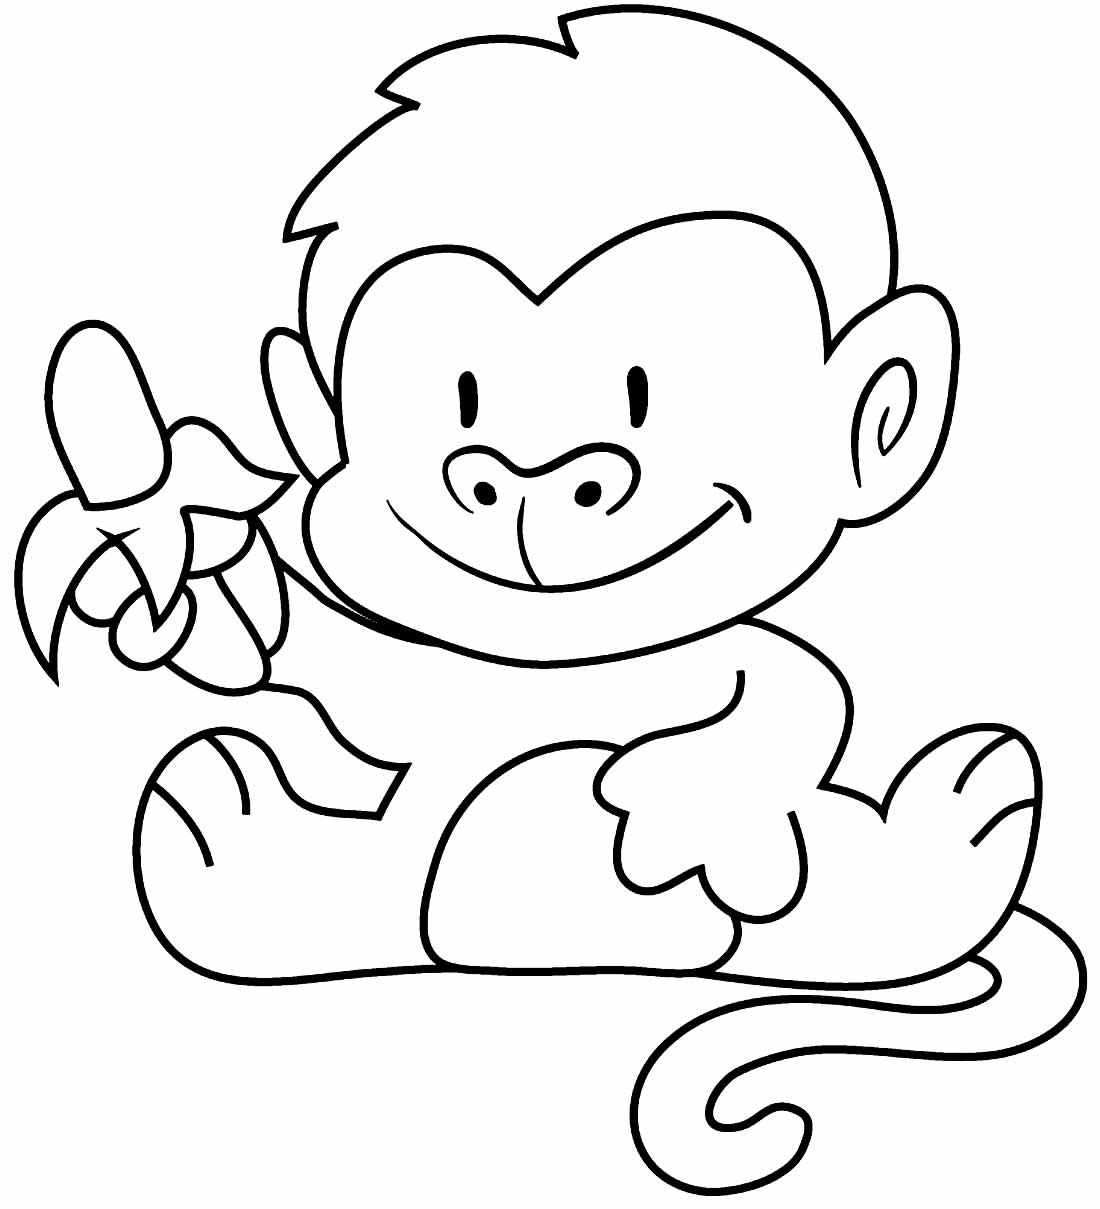 Desenho de macaco para pintar